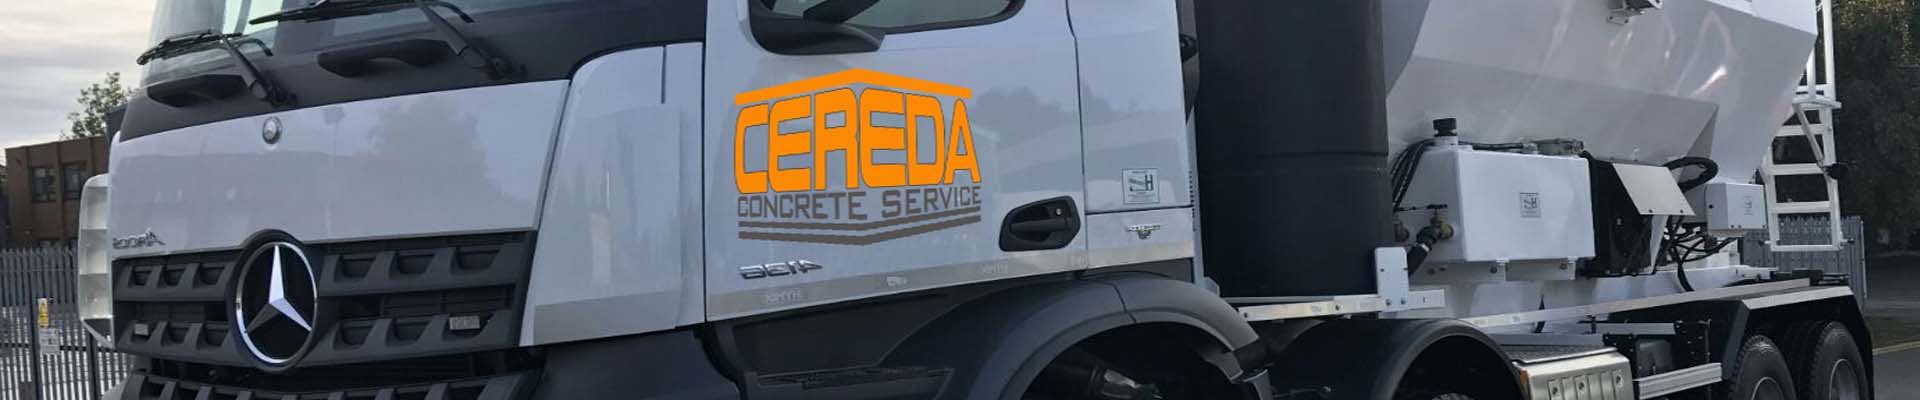 Cereda Concrete Pump Service